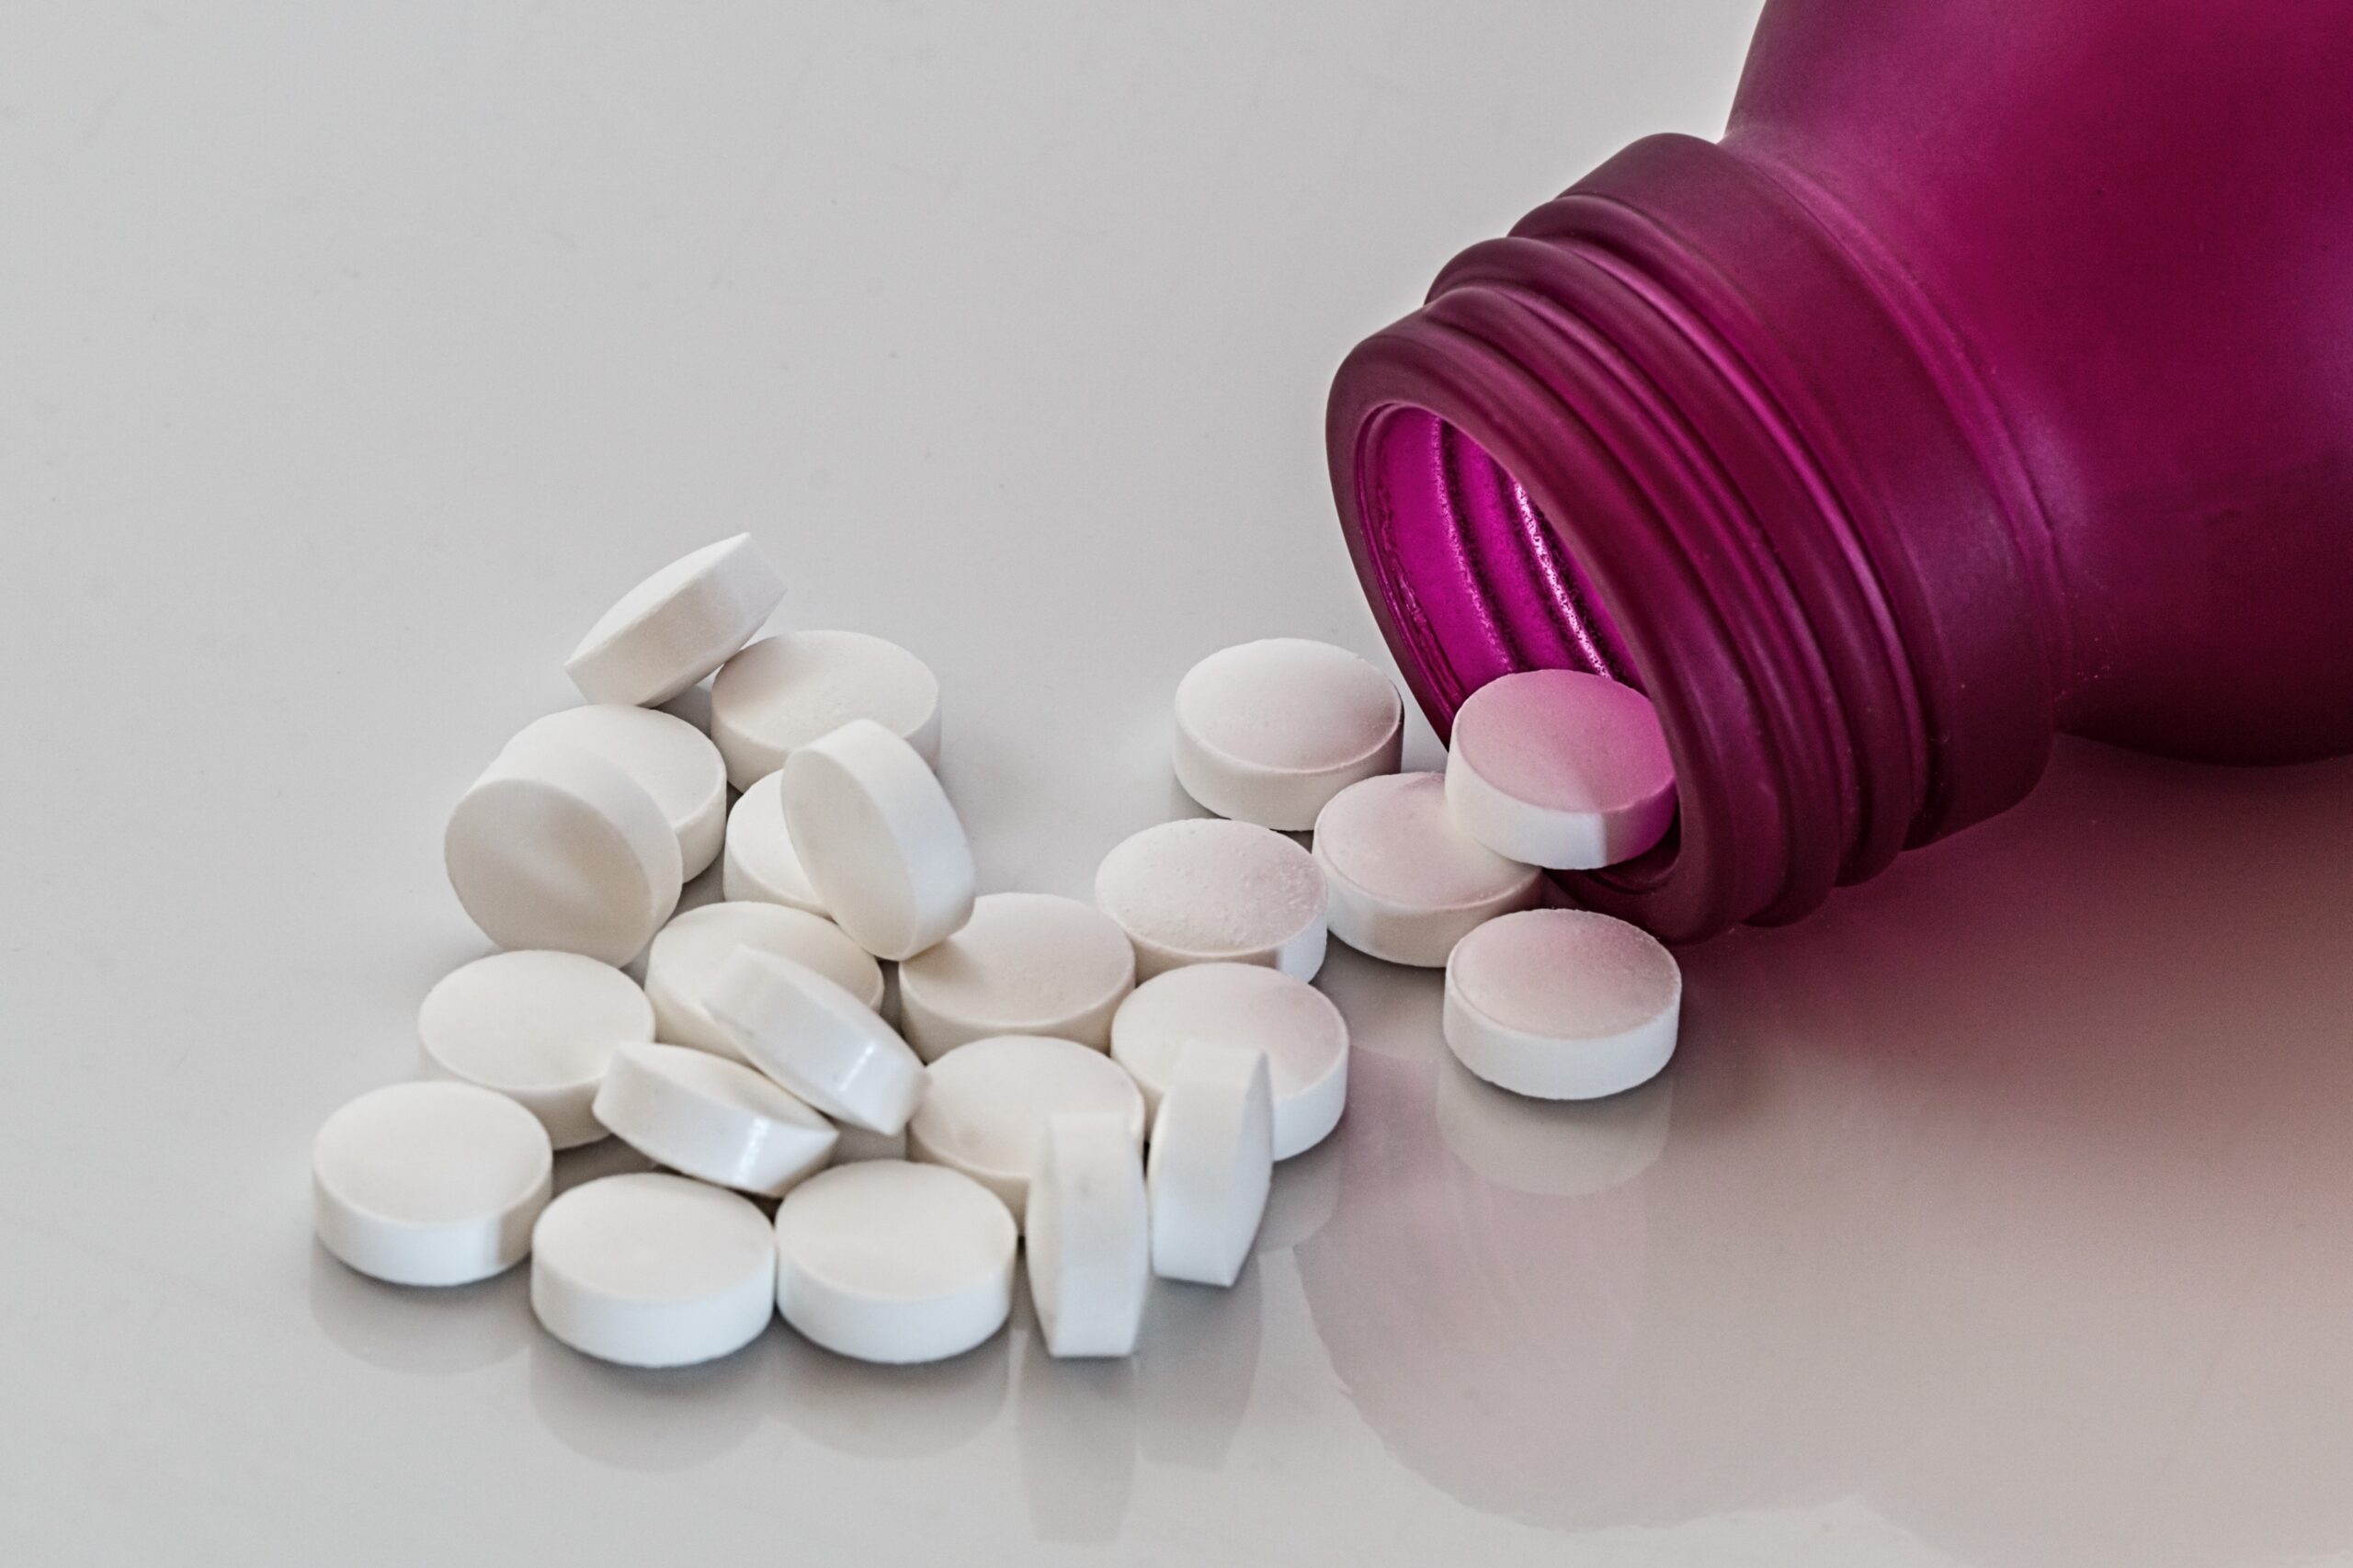 Benzodiazepine bottle, scattered pills